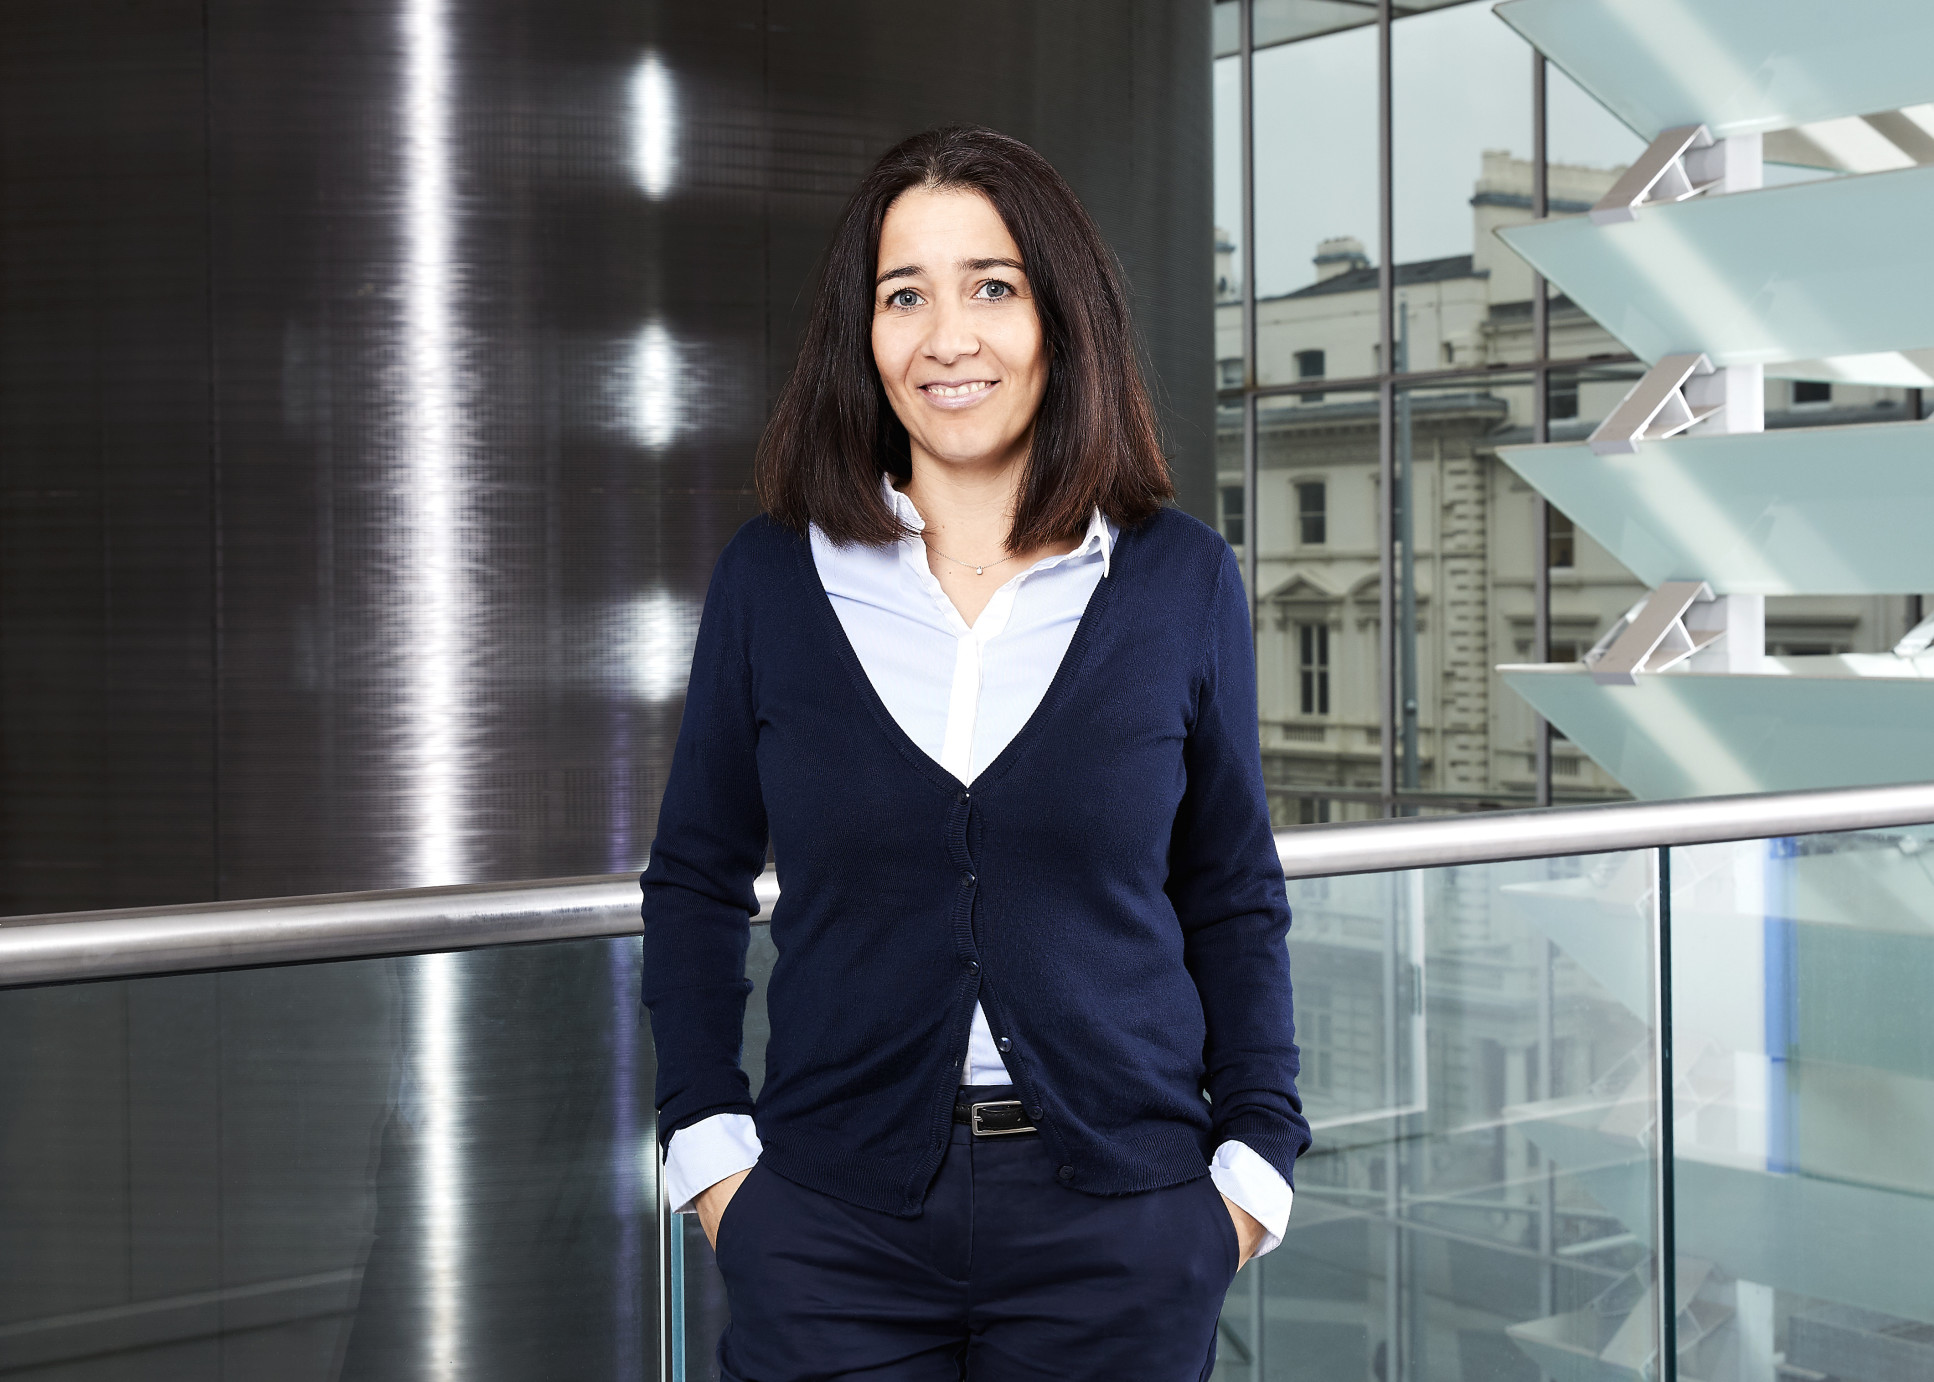 Dr Cláudia Custódio is Associate Professor of Finance at the Business School